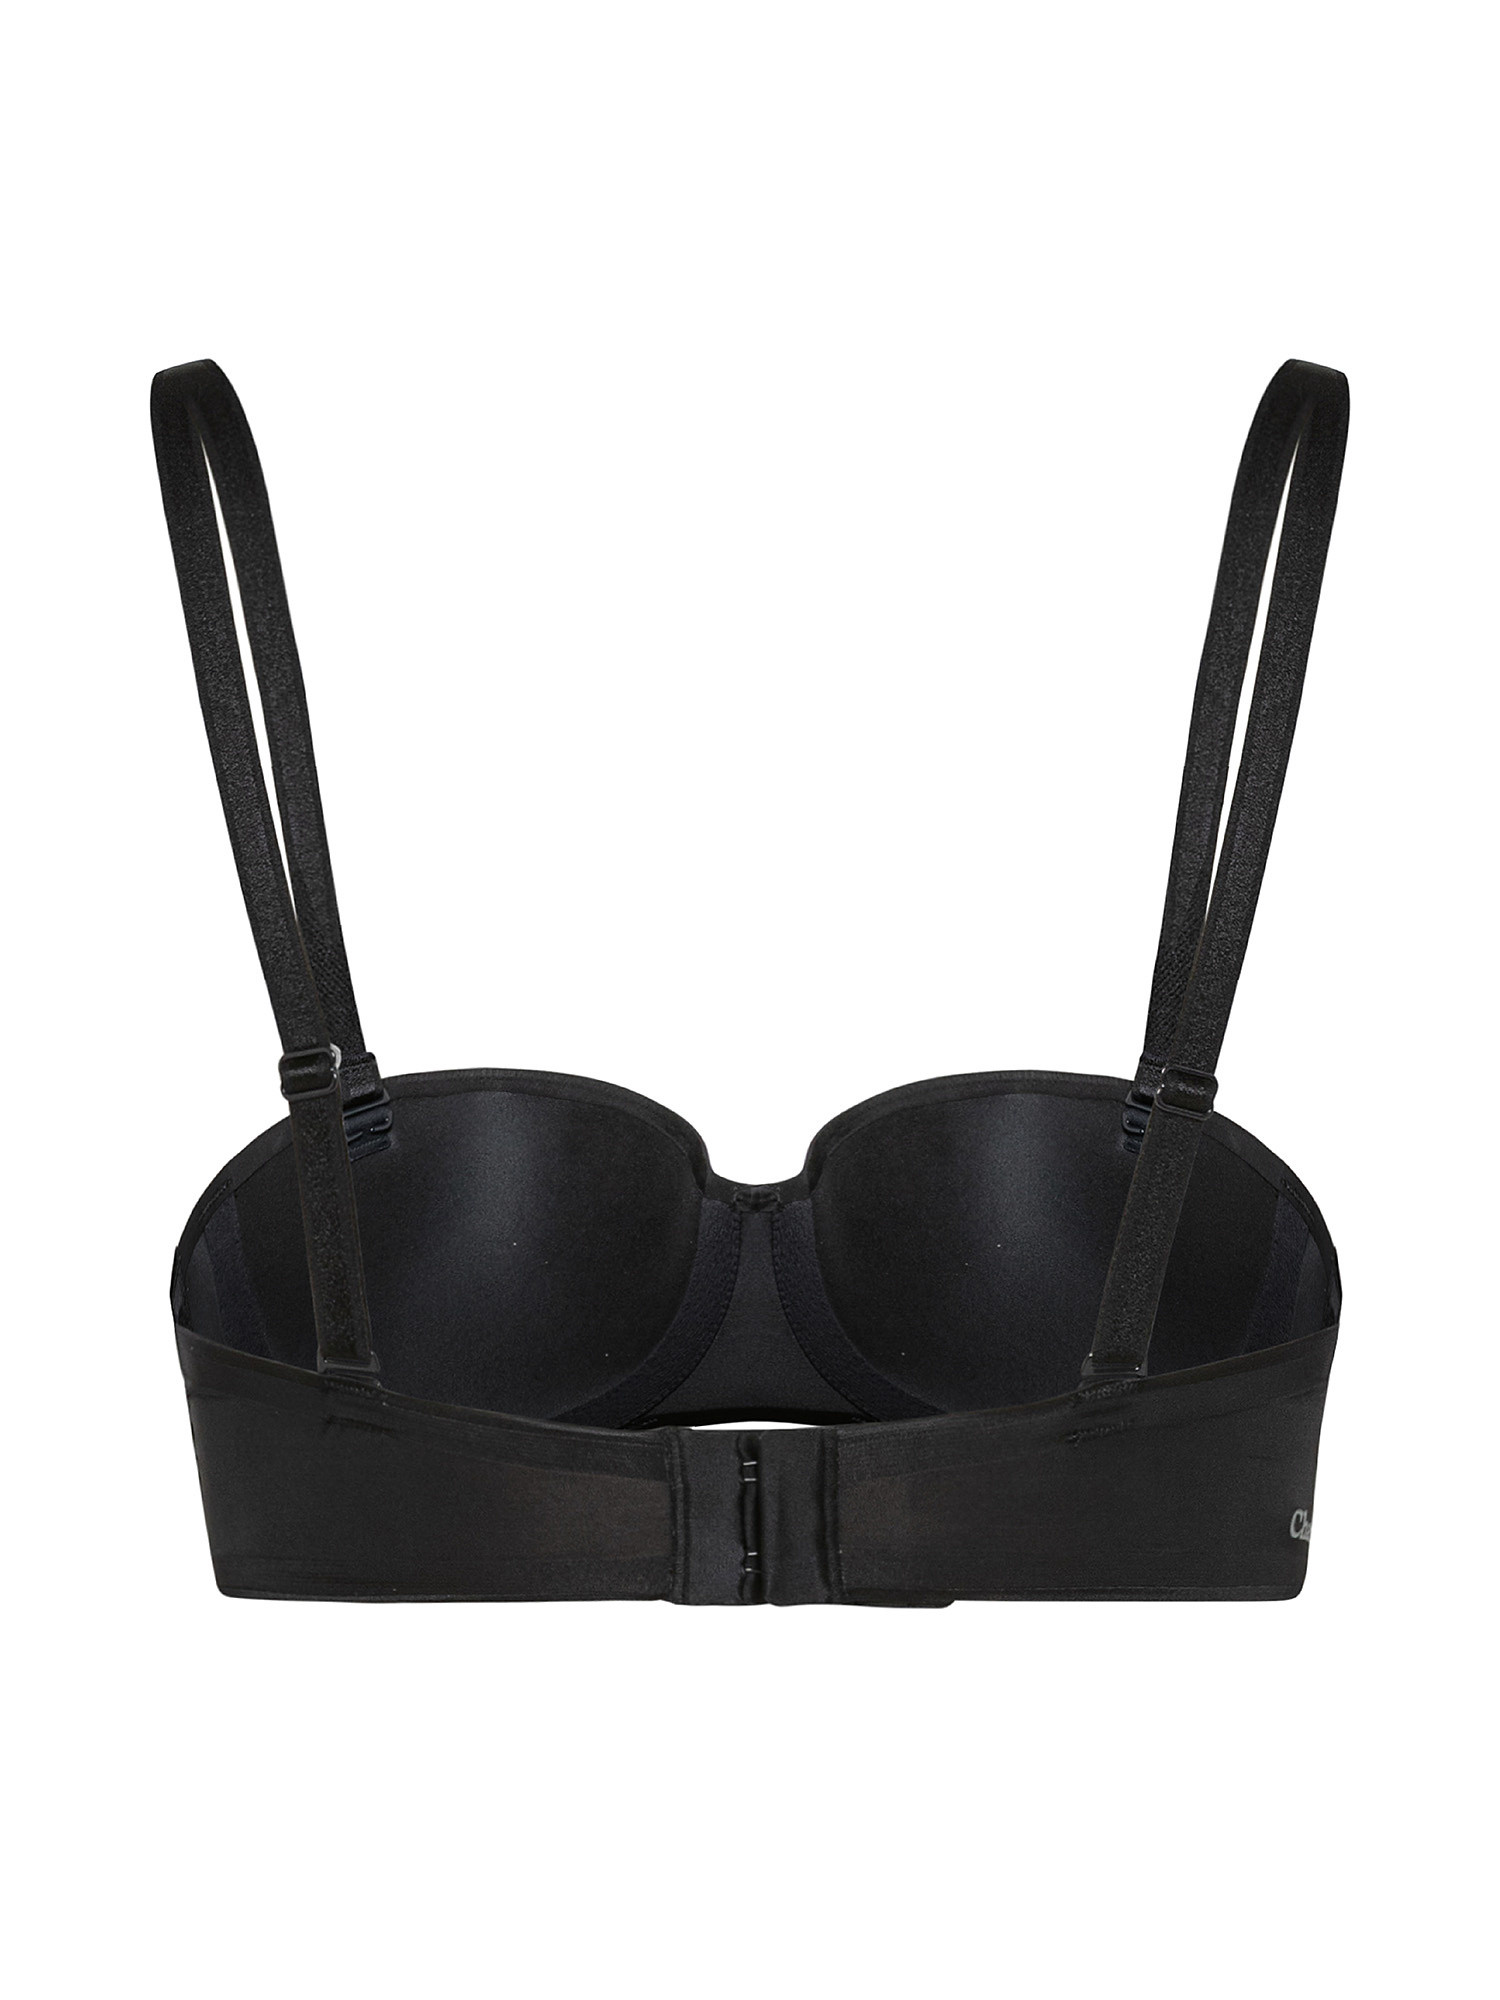 Bandeau bra with removable straps, Black, large image number 1